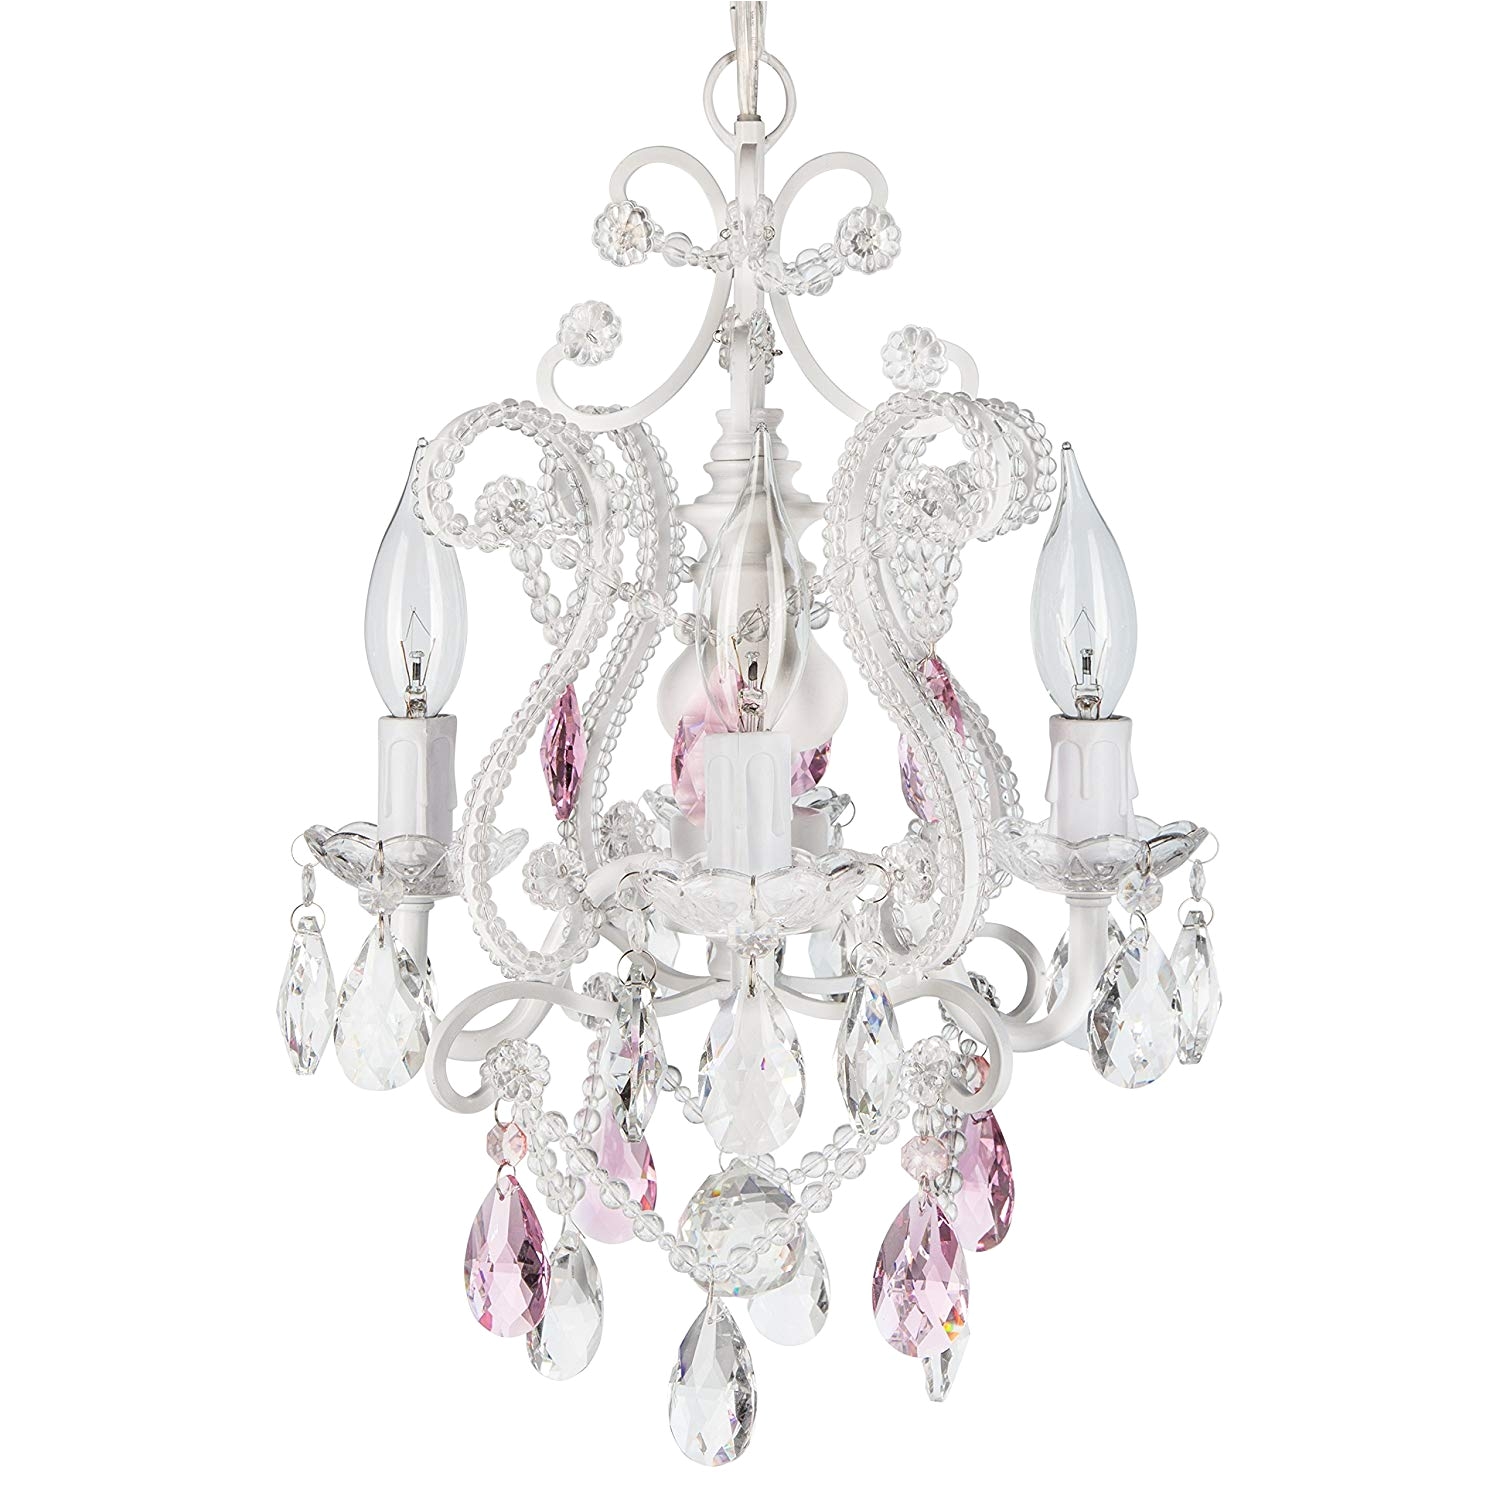 josephine pink crystal beaded white chandelier mini nursery plug in glass pendant 4 light wrought iron swag ceiling lighting fixture lamp amazon com